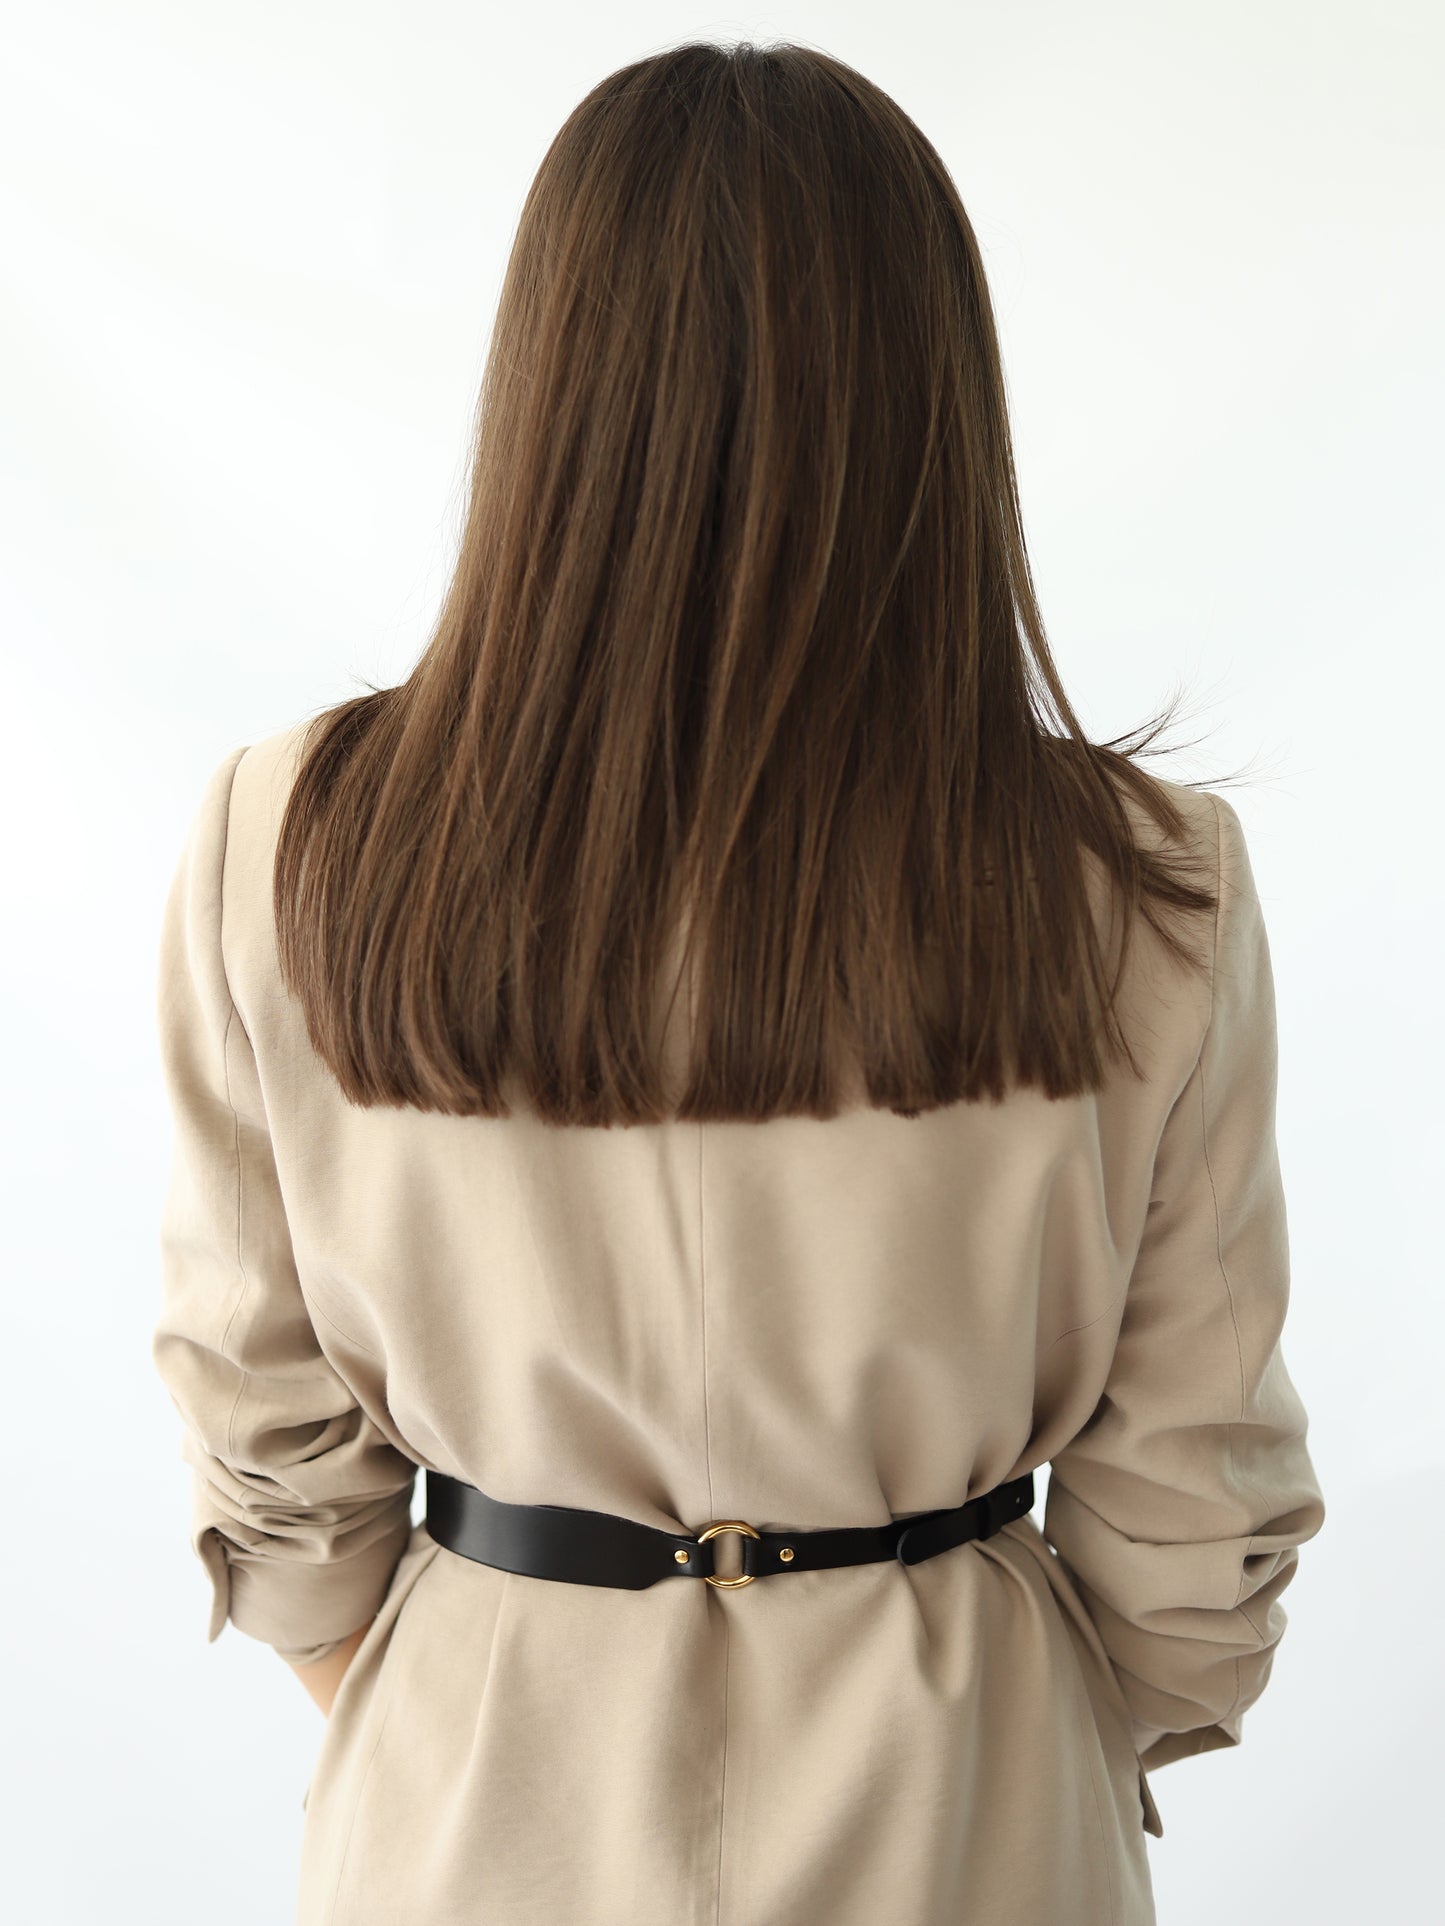 Back view of skinny leather belt worn over beige blazer.